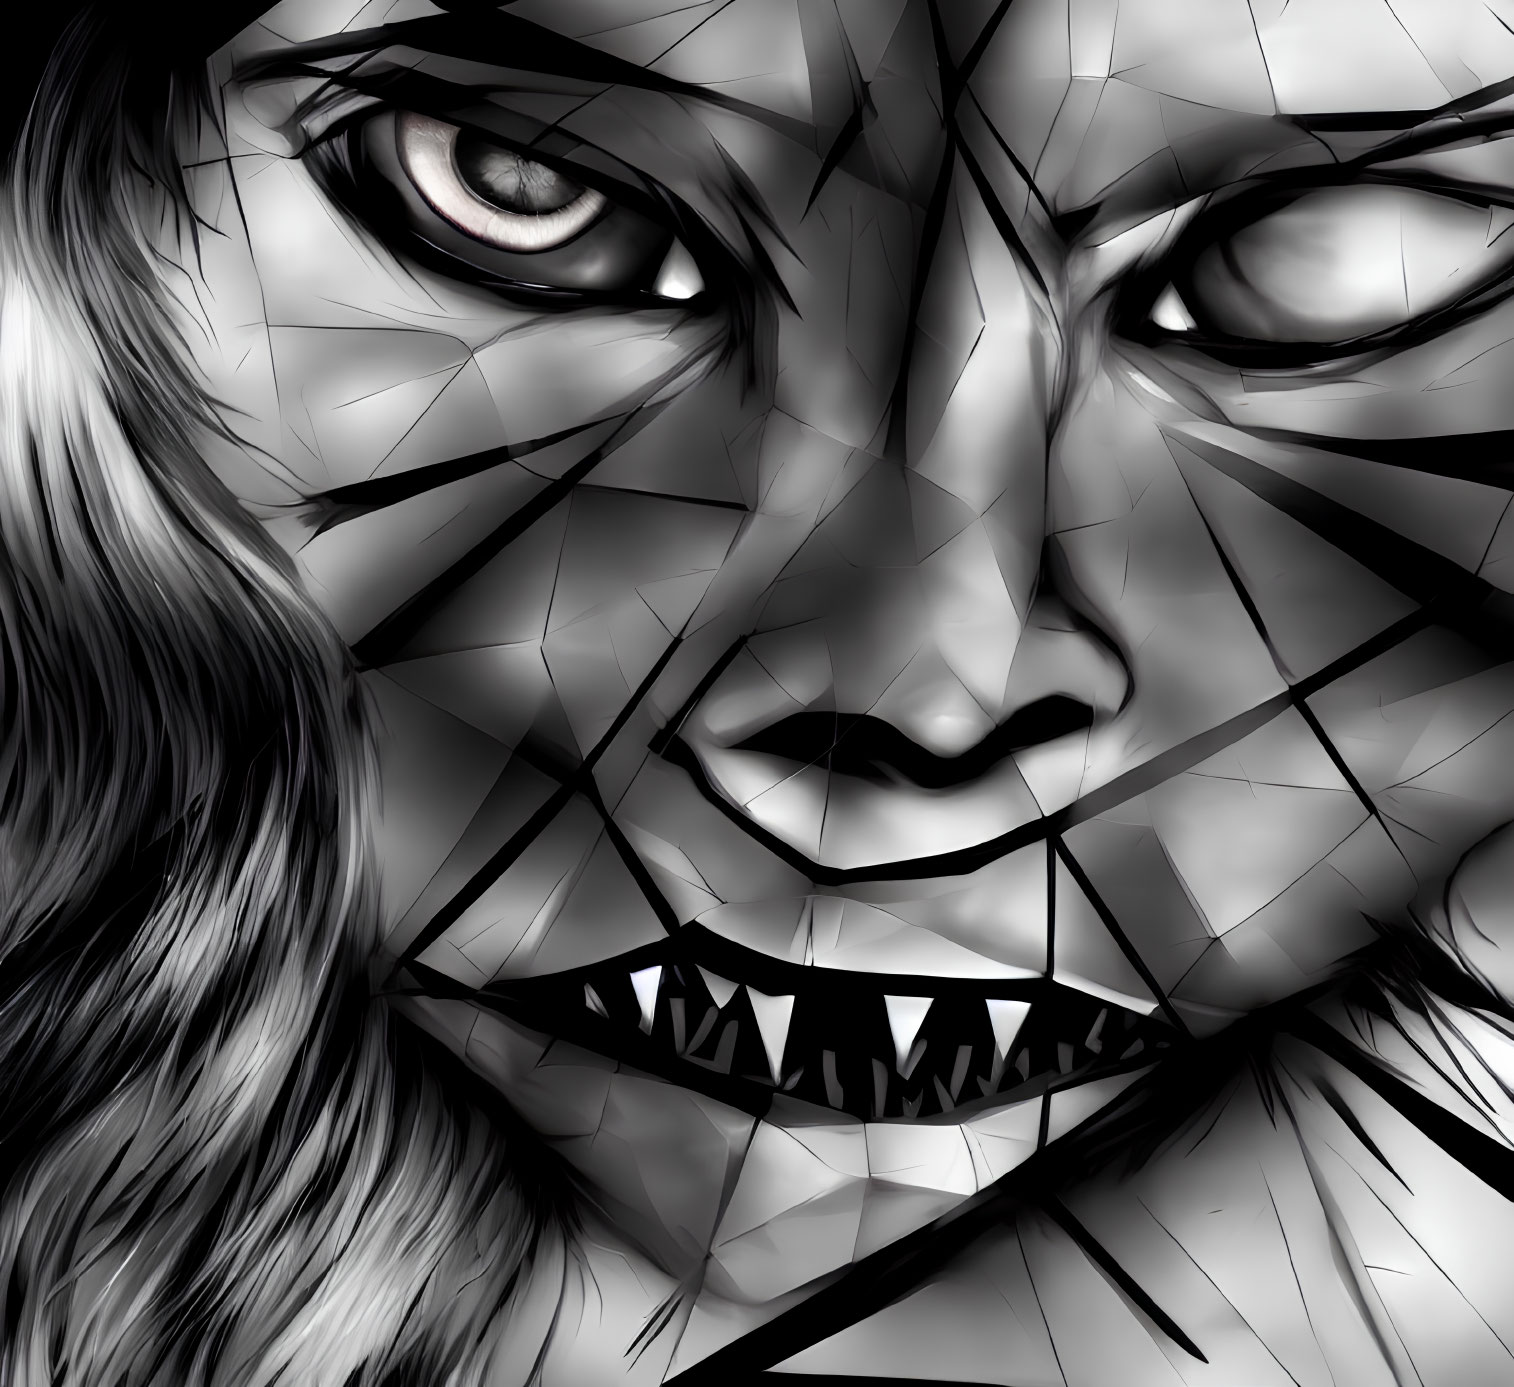 Monochrome digital artwork of fragmented feline face with sharp teeth and intense eyes.